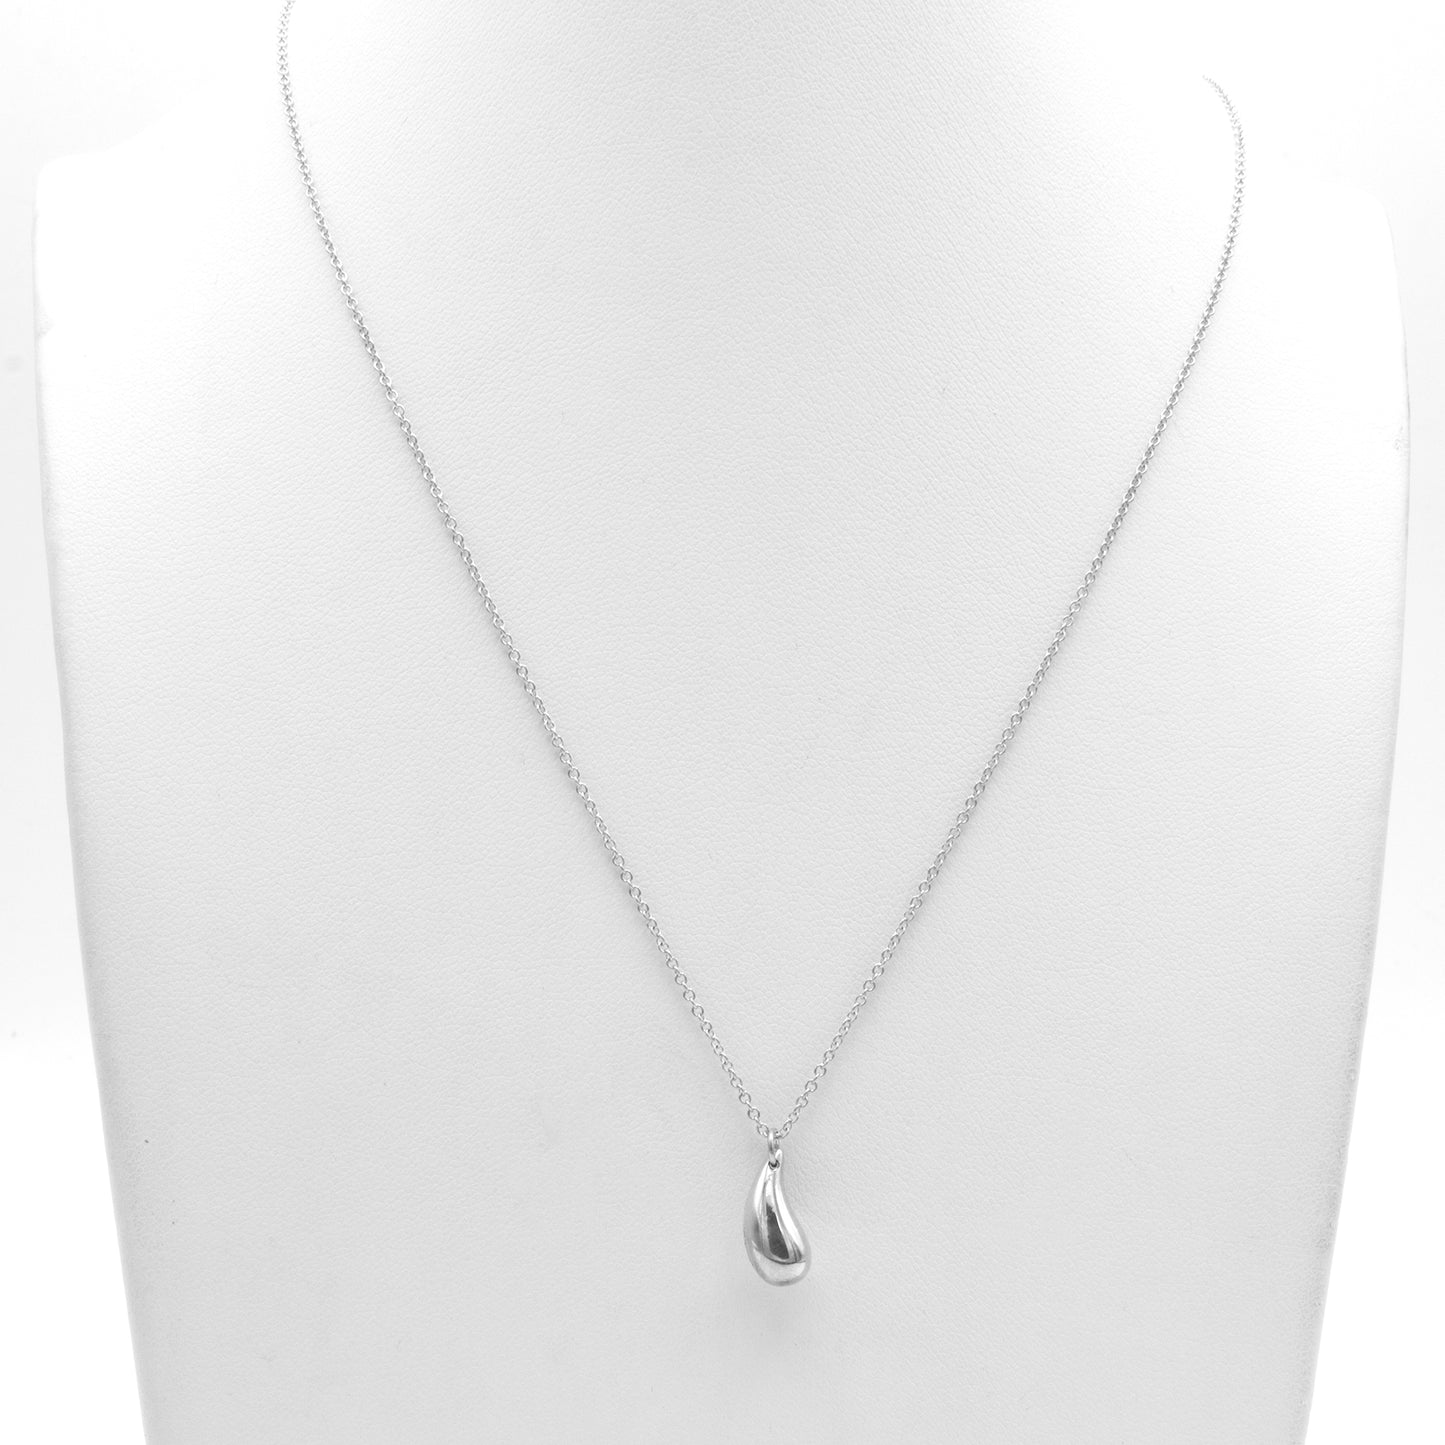 Tiffany & Co Teardrop Elsa Peretti necklace